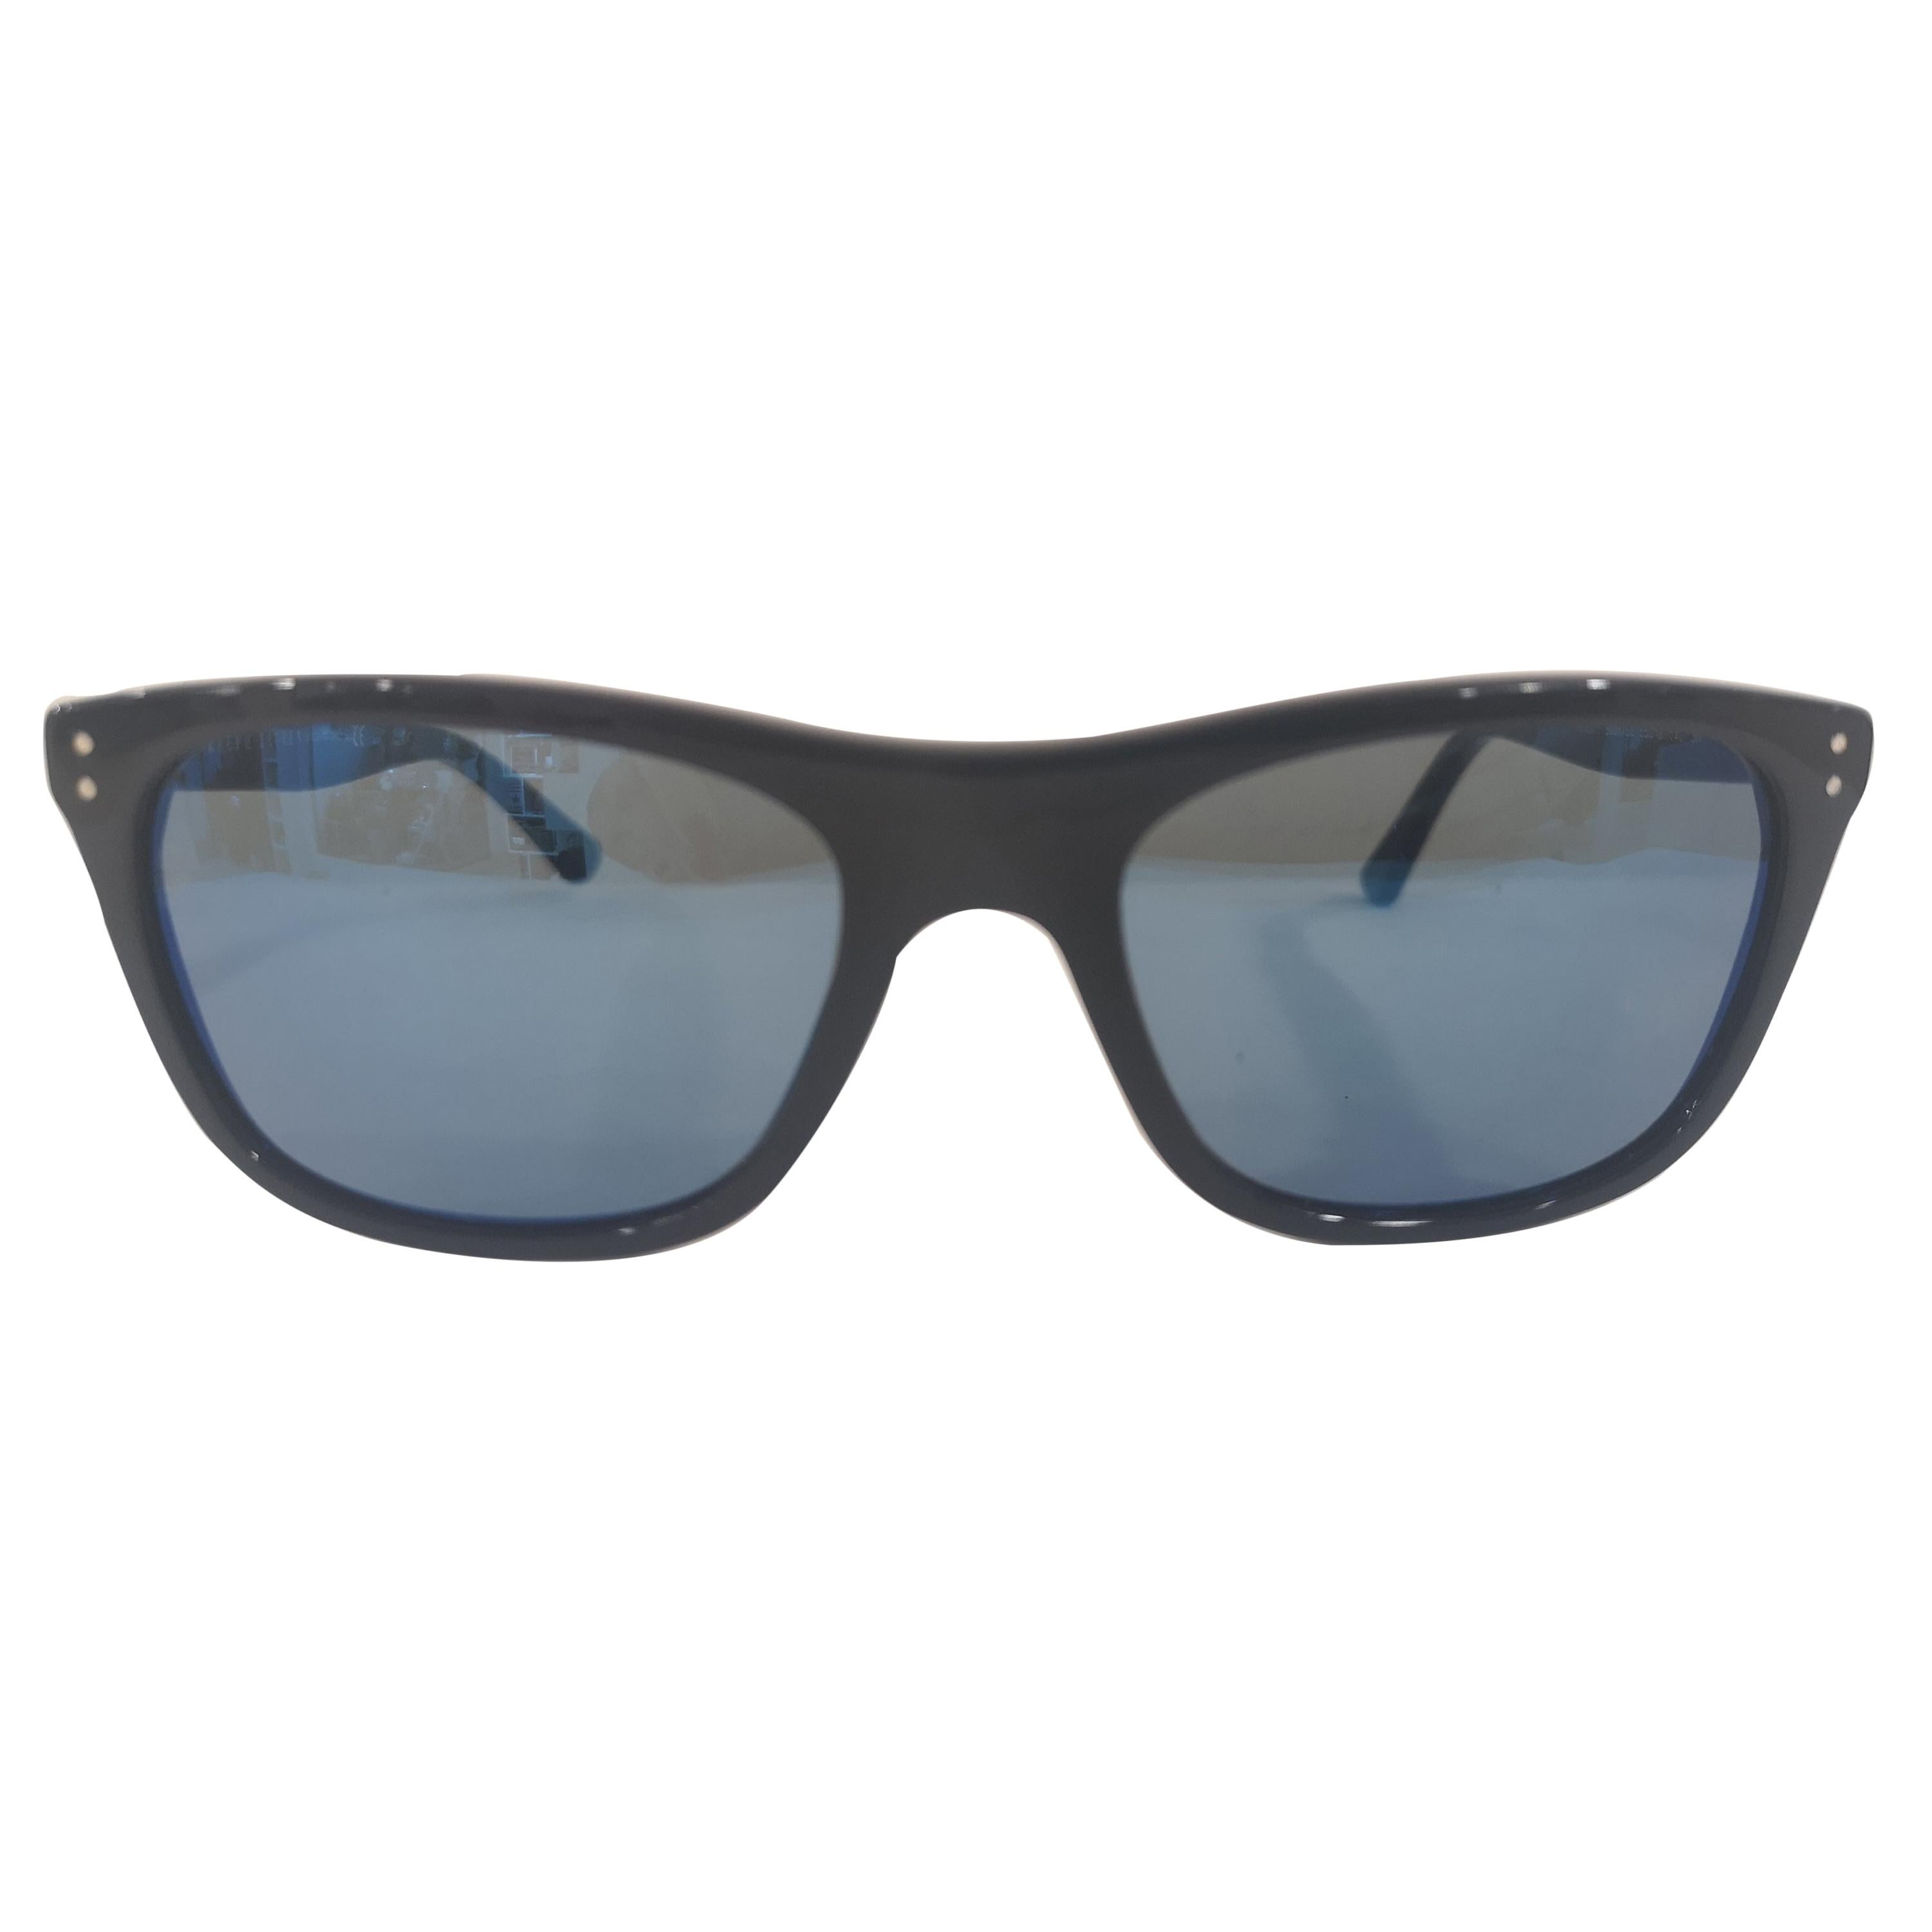 Ralph Lauren sunglasses NWOT For Sale